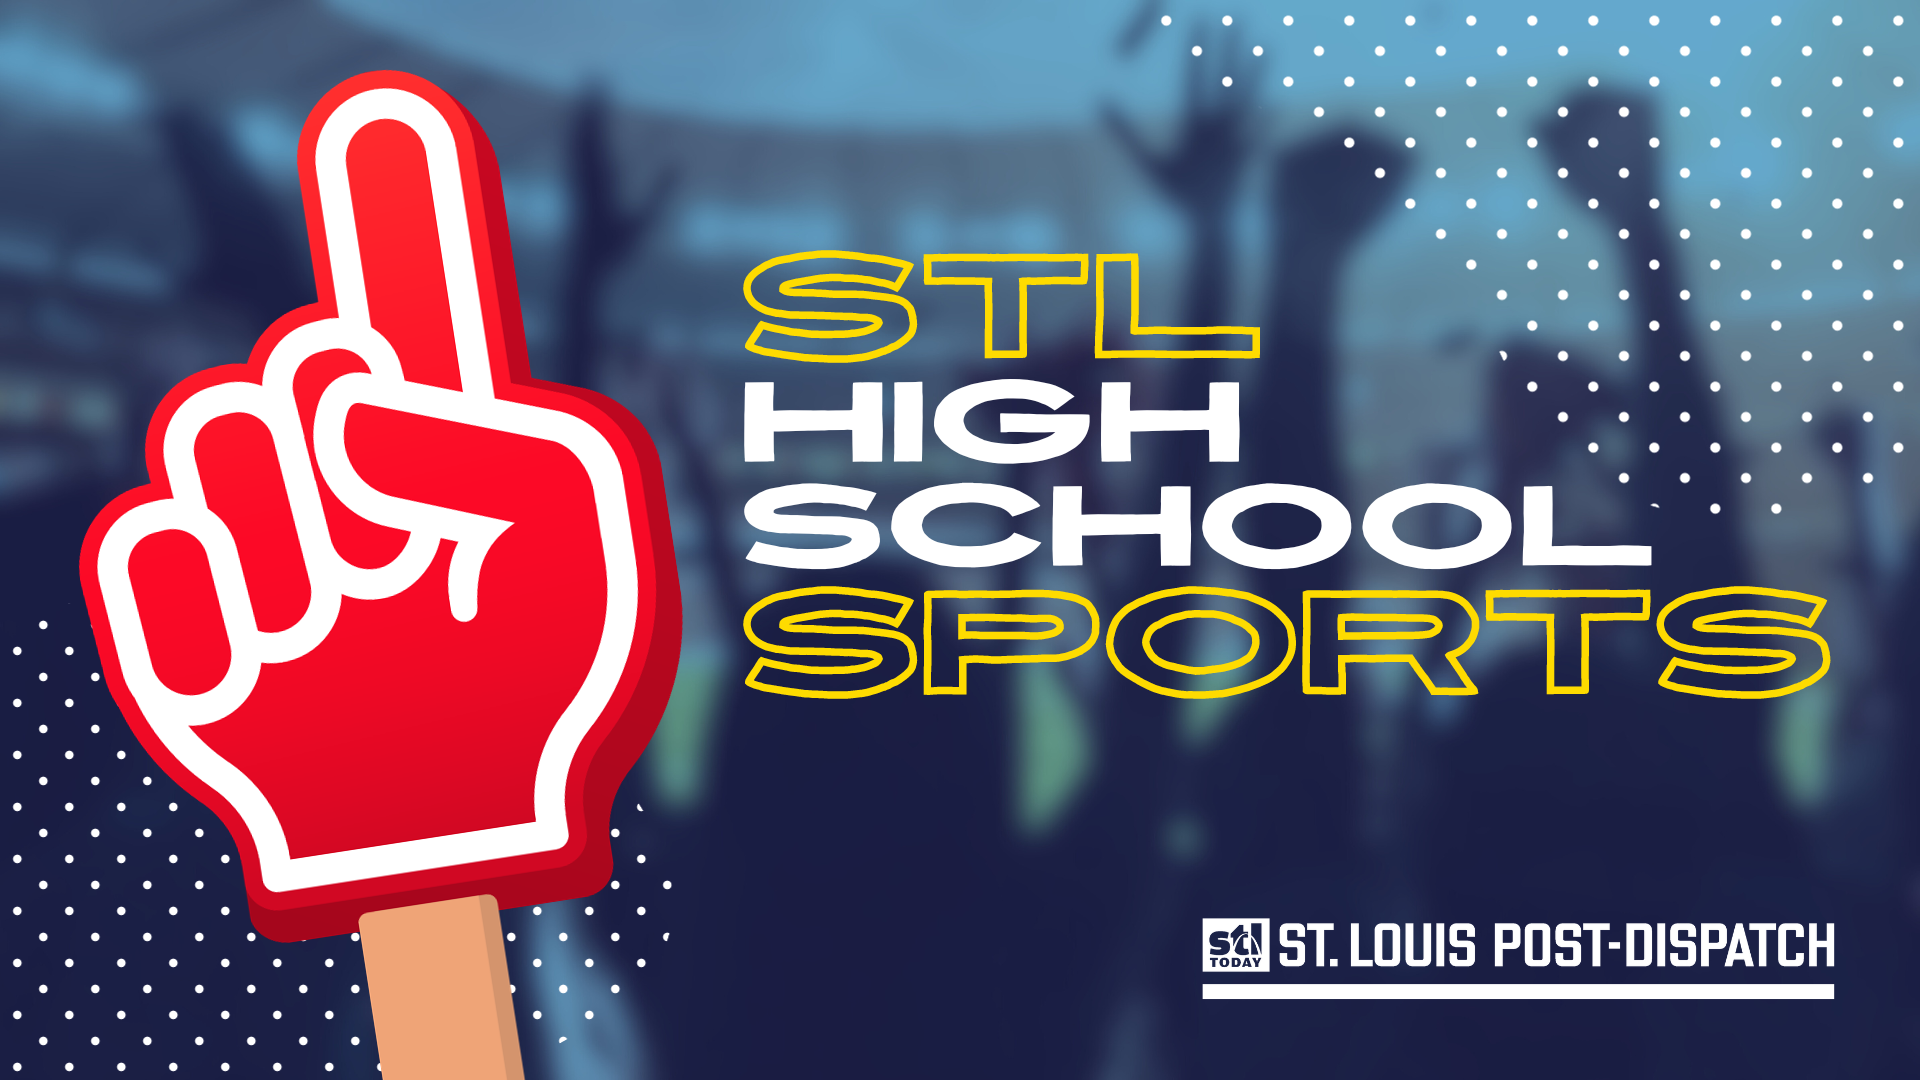 Brace yourself, winter sports season is coming: STL High School Sports